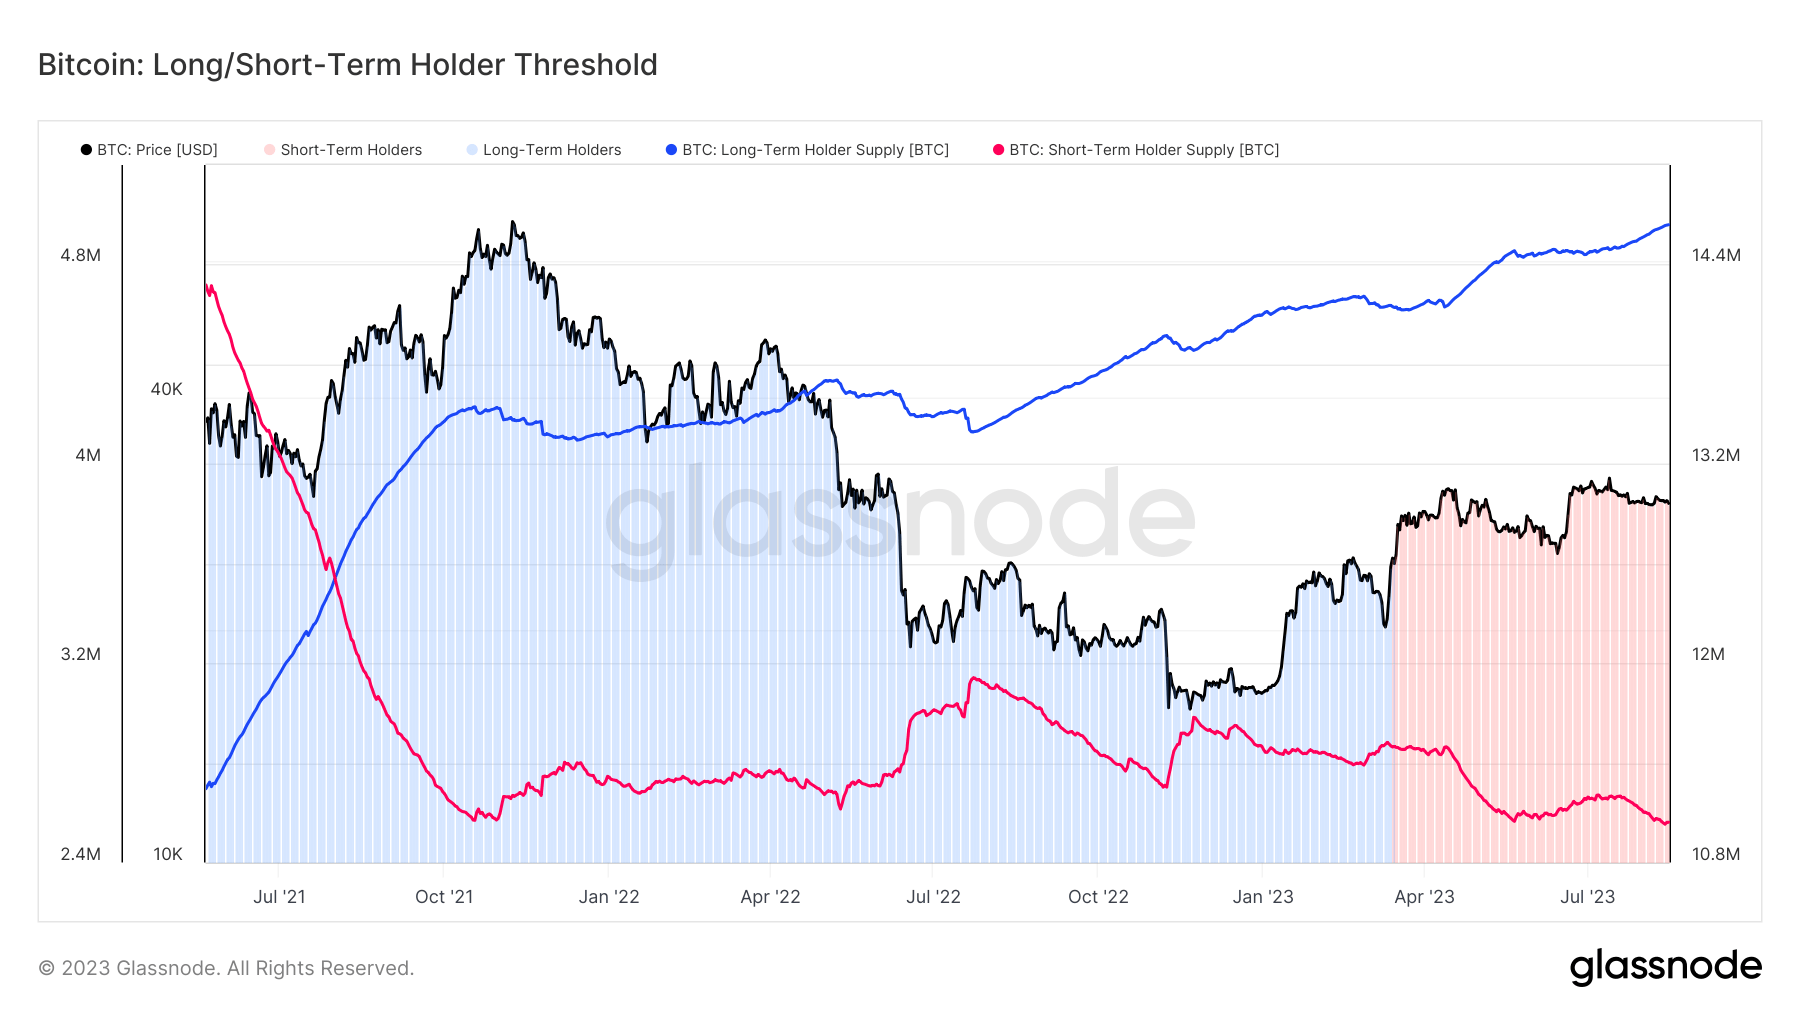 Bitcoin Holders Threshold chart. 